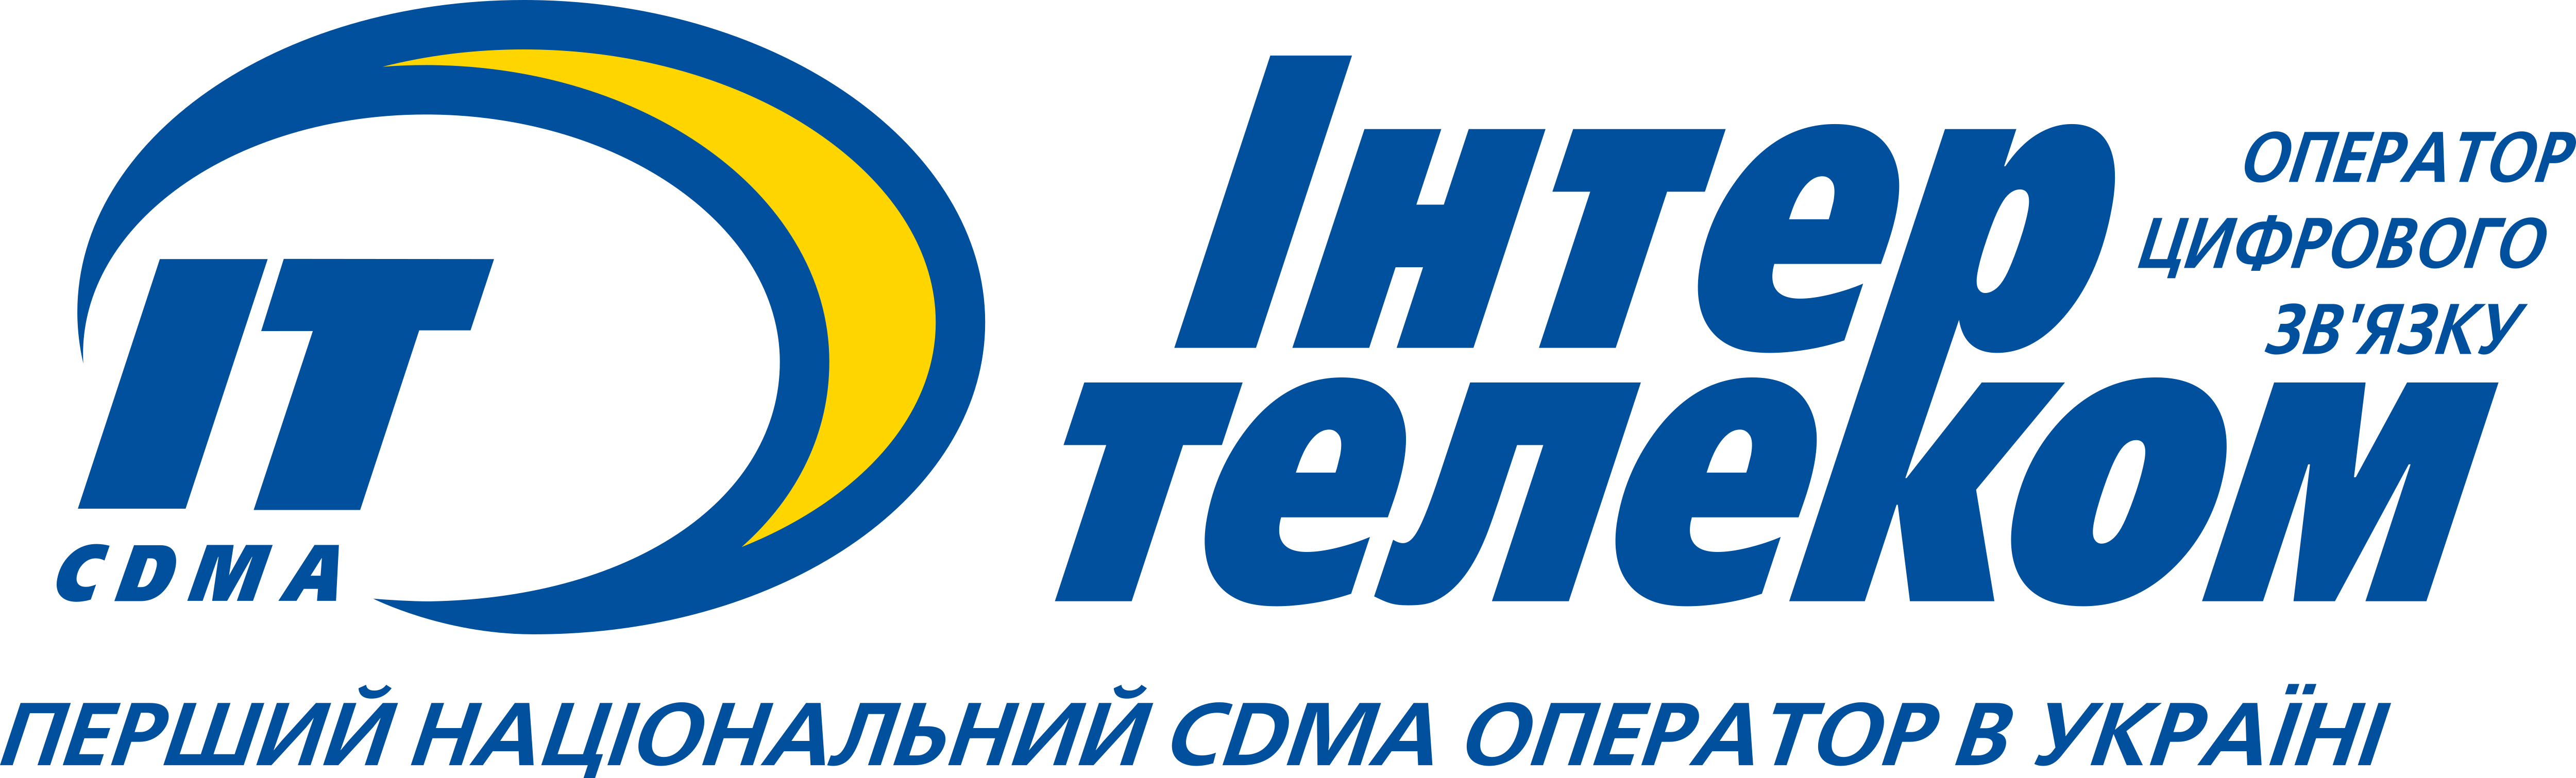 CDMA Logo - Intertelecom CDMA